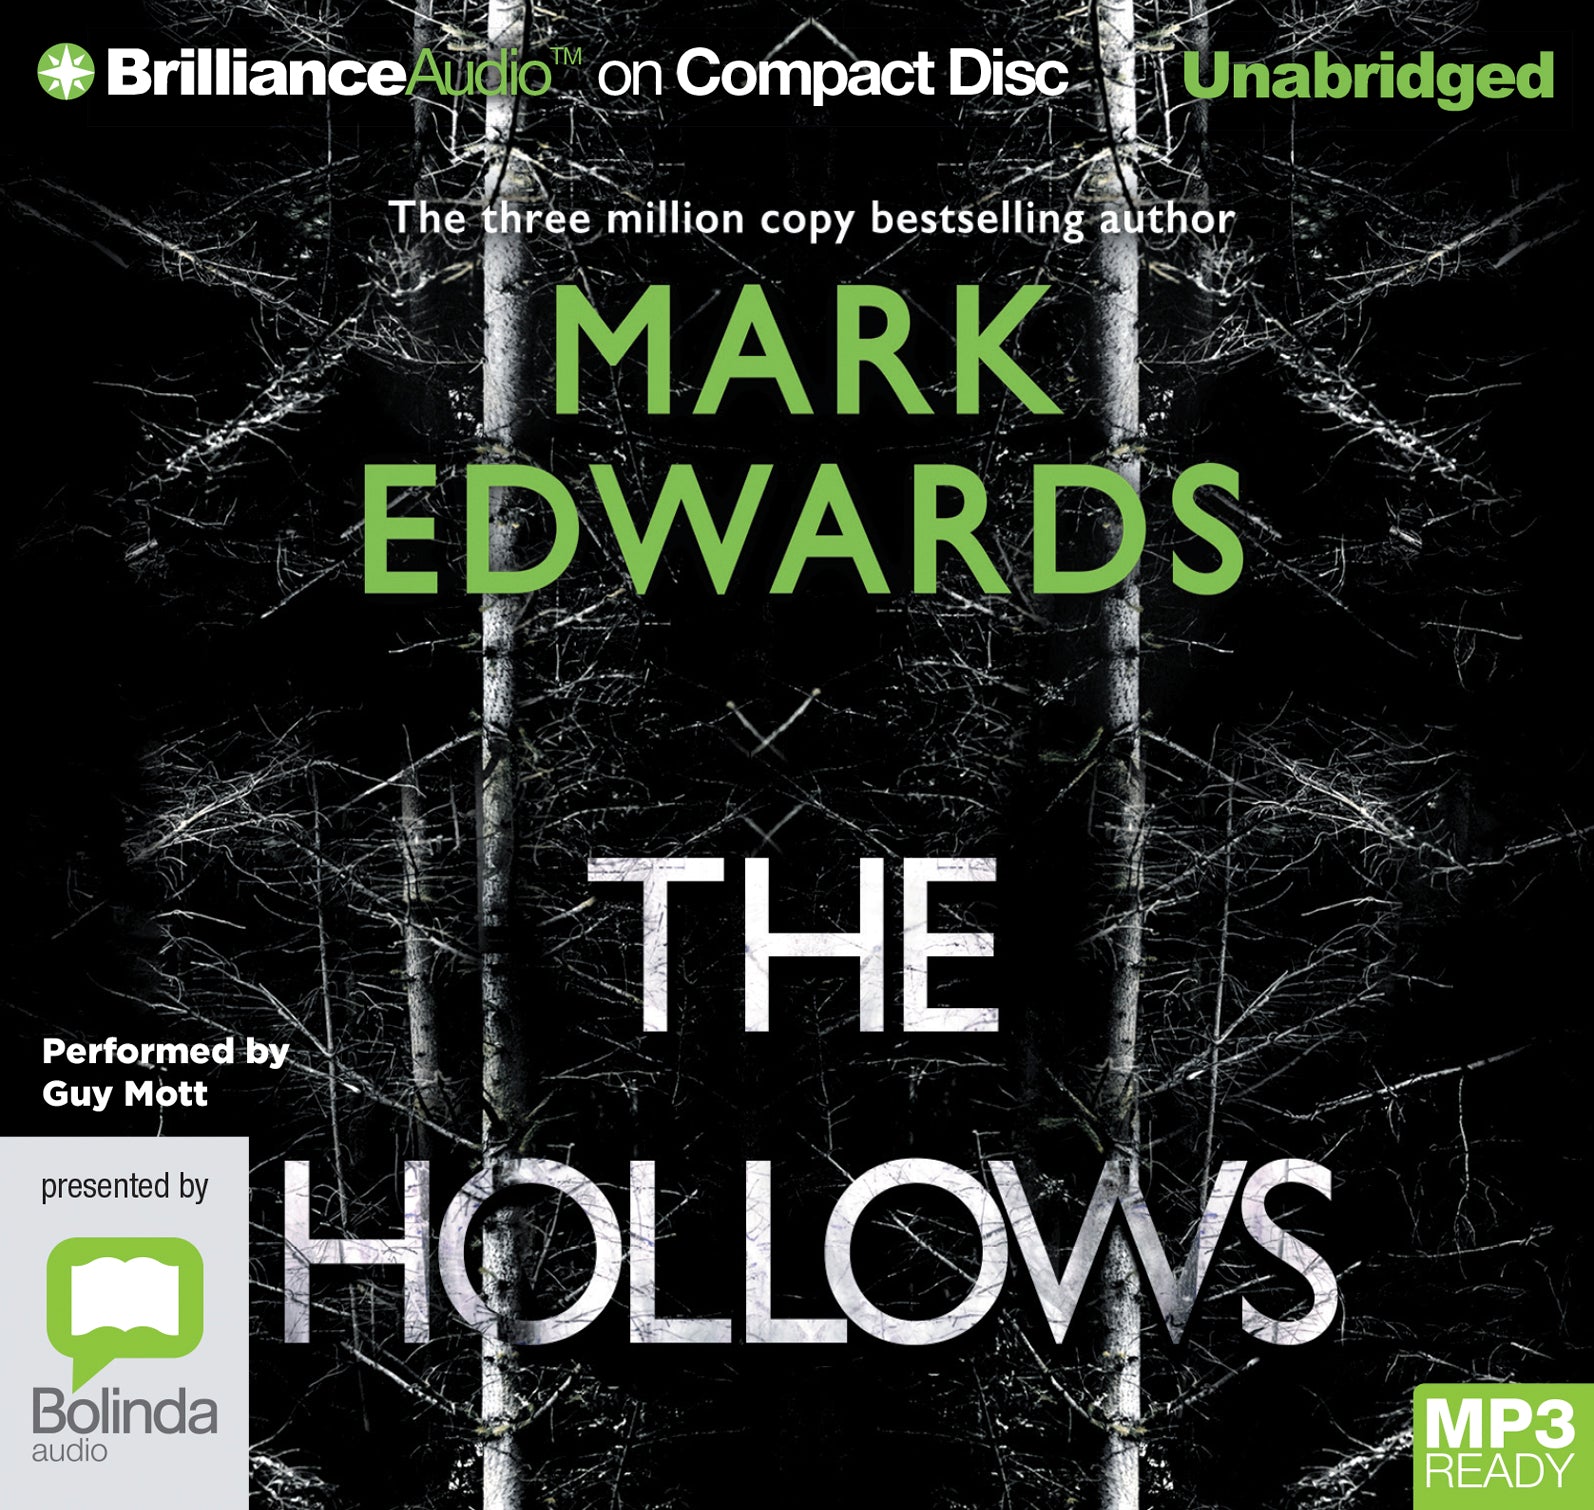 The Hollows  - Unbridged Audio Book on MP3